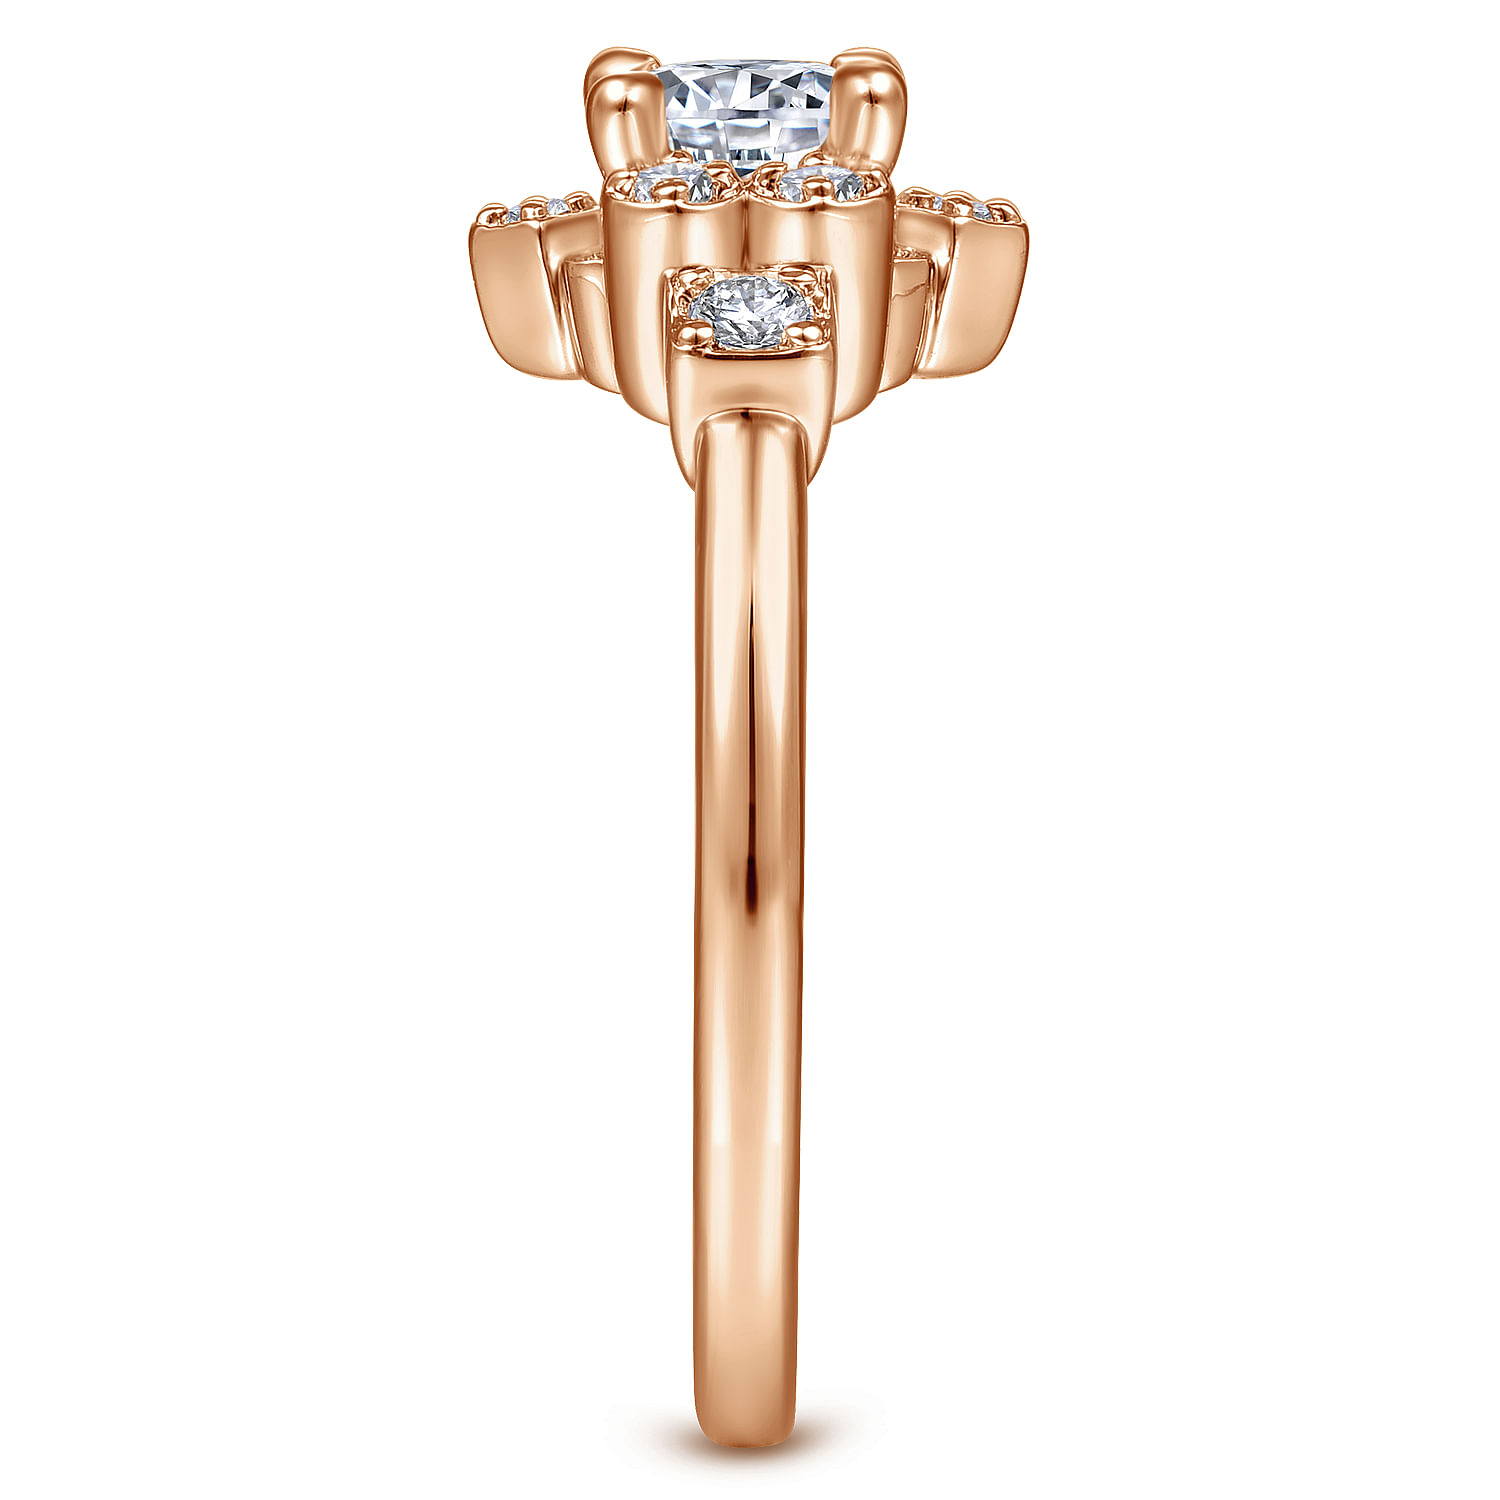 Unique 14K Rose Gold Halo Diamond Engagement Ring